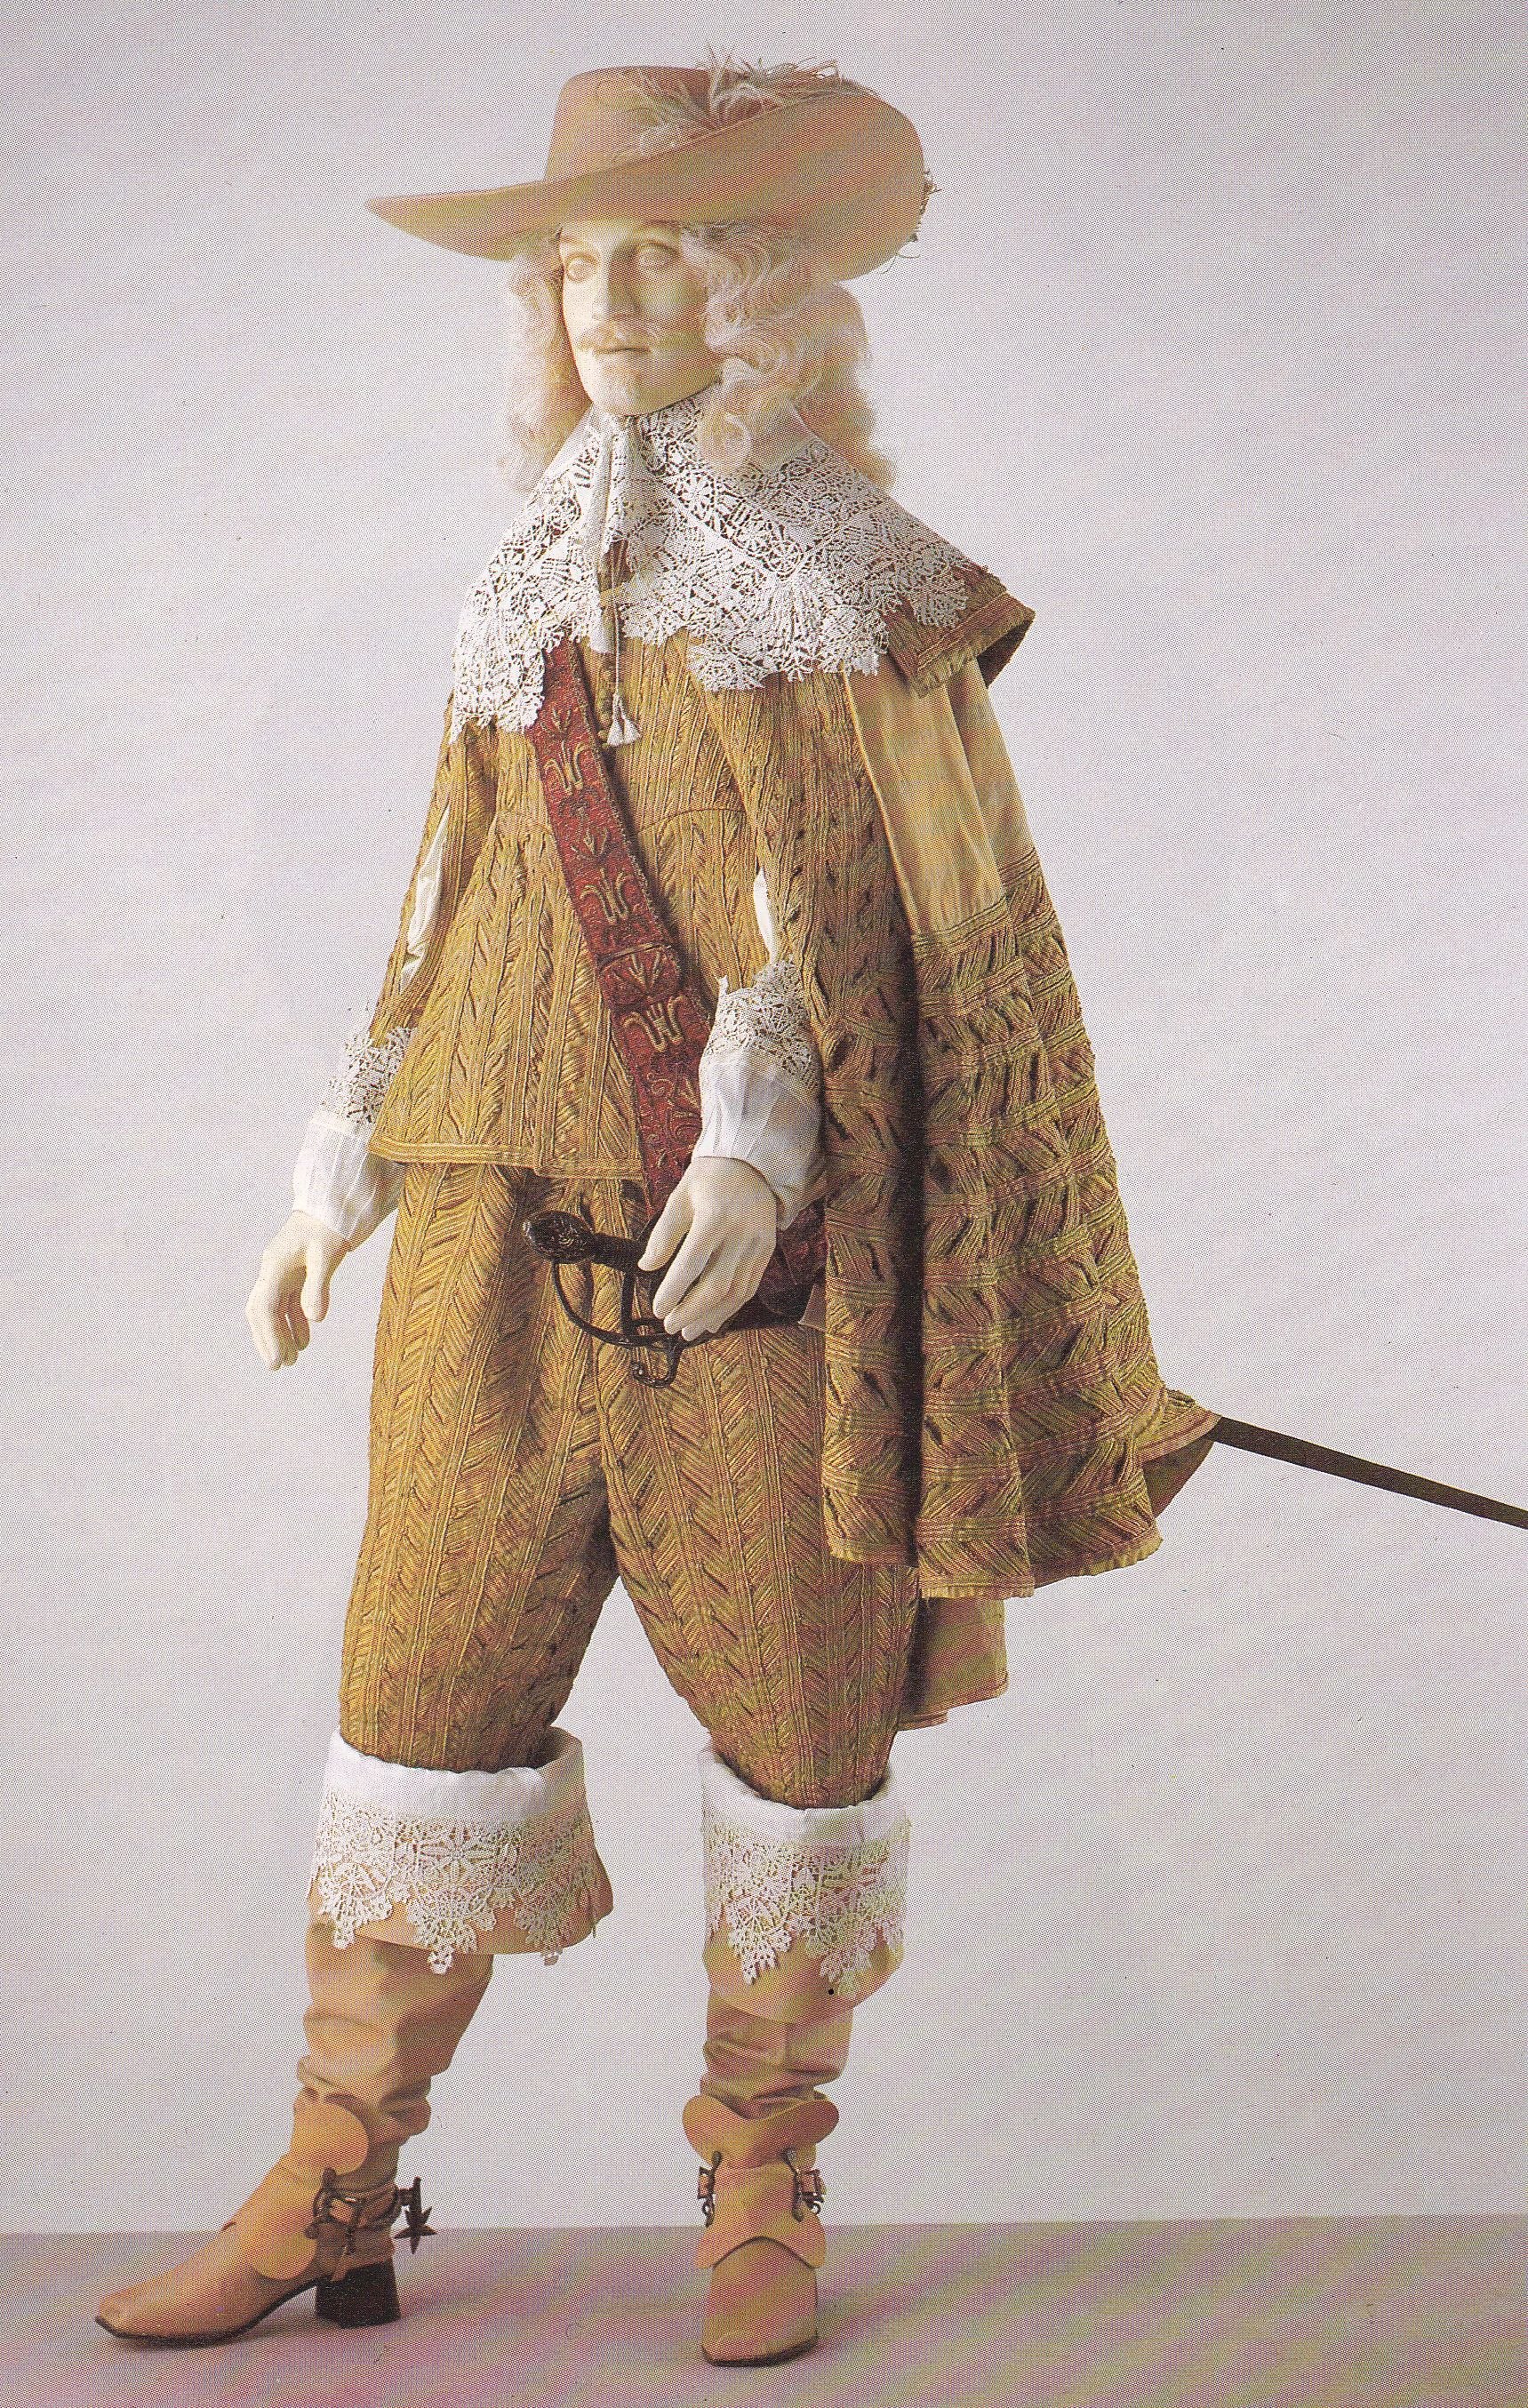 17 century. Мушкетерская мода Барокко. Франция 17 век костюм мушкетера. Костюм мушкетеров Франции 17 века. Французский мушкетерский костюм 17 века.